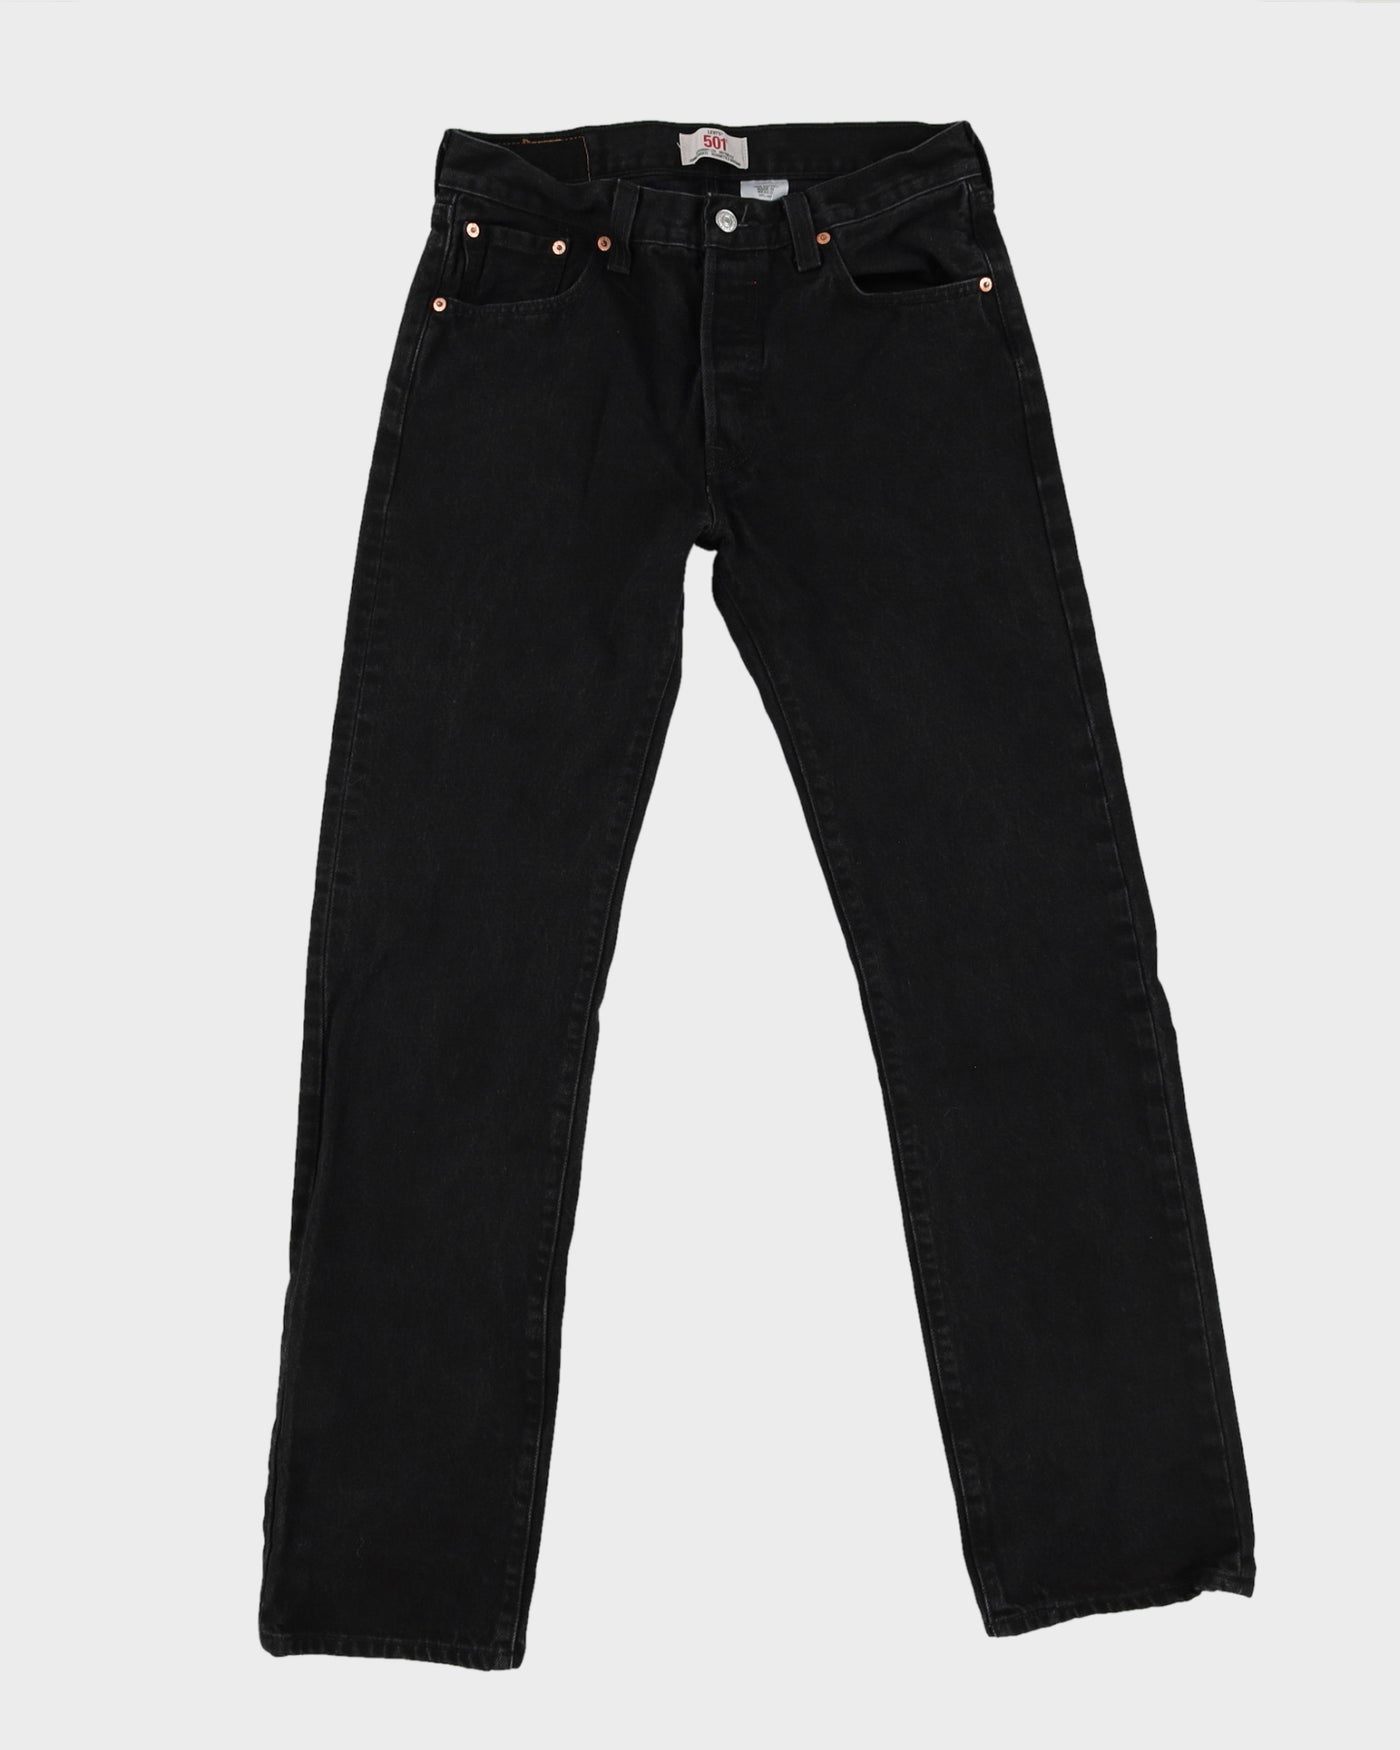 Levi's 501 Black Jeans - W30 L32